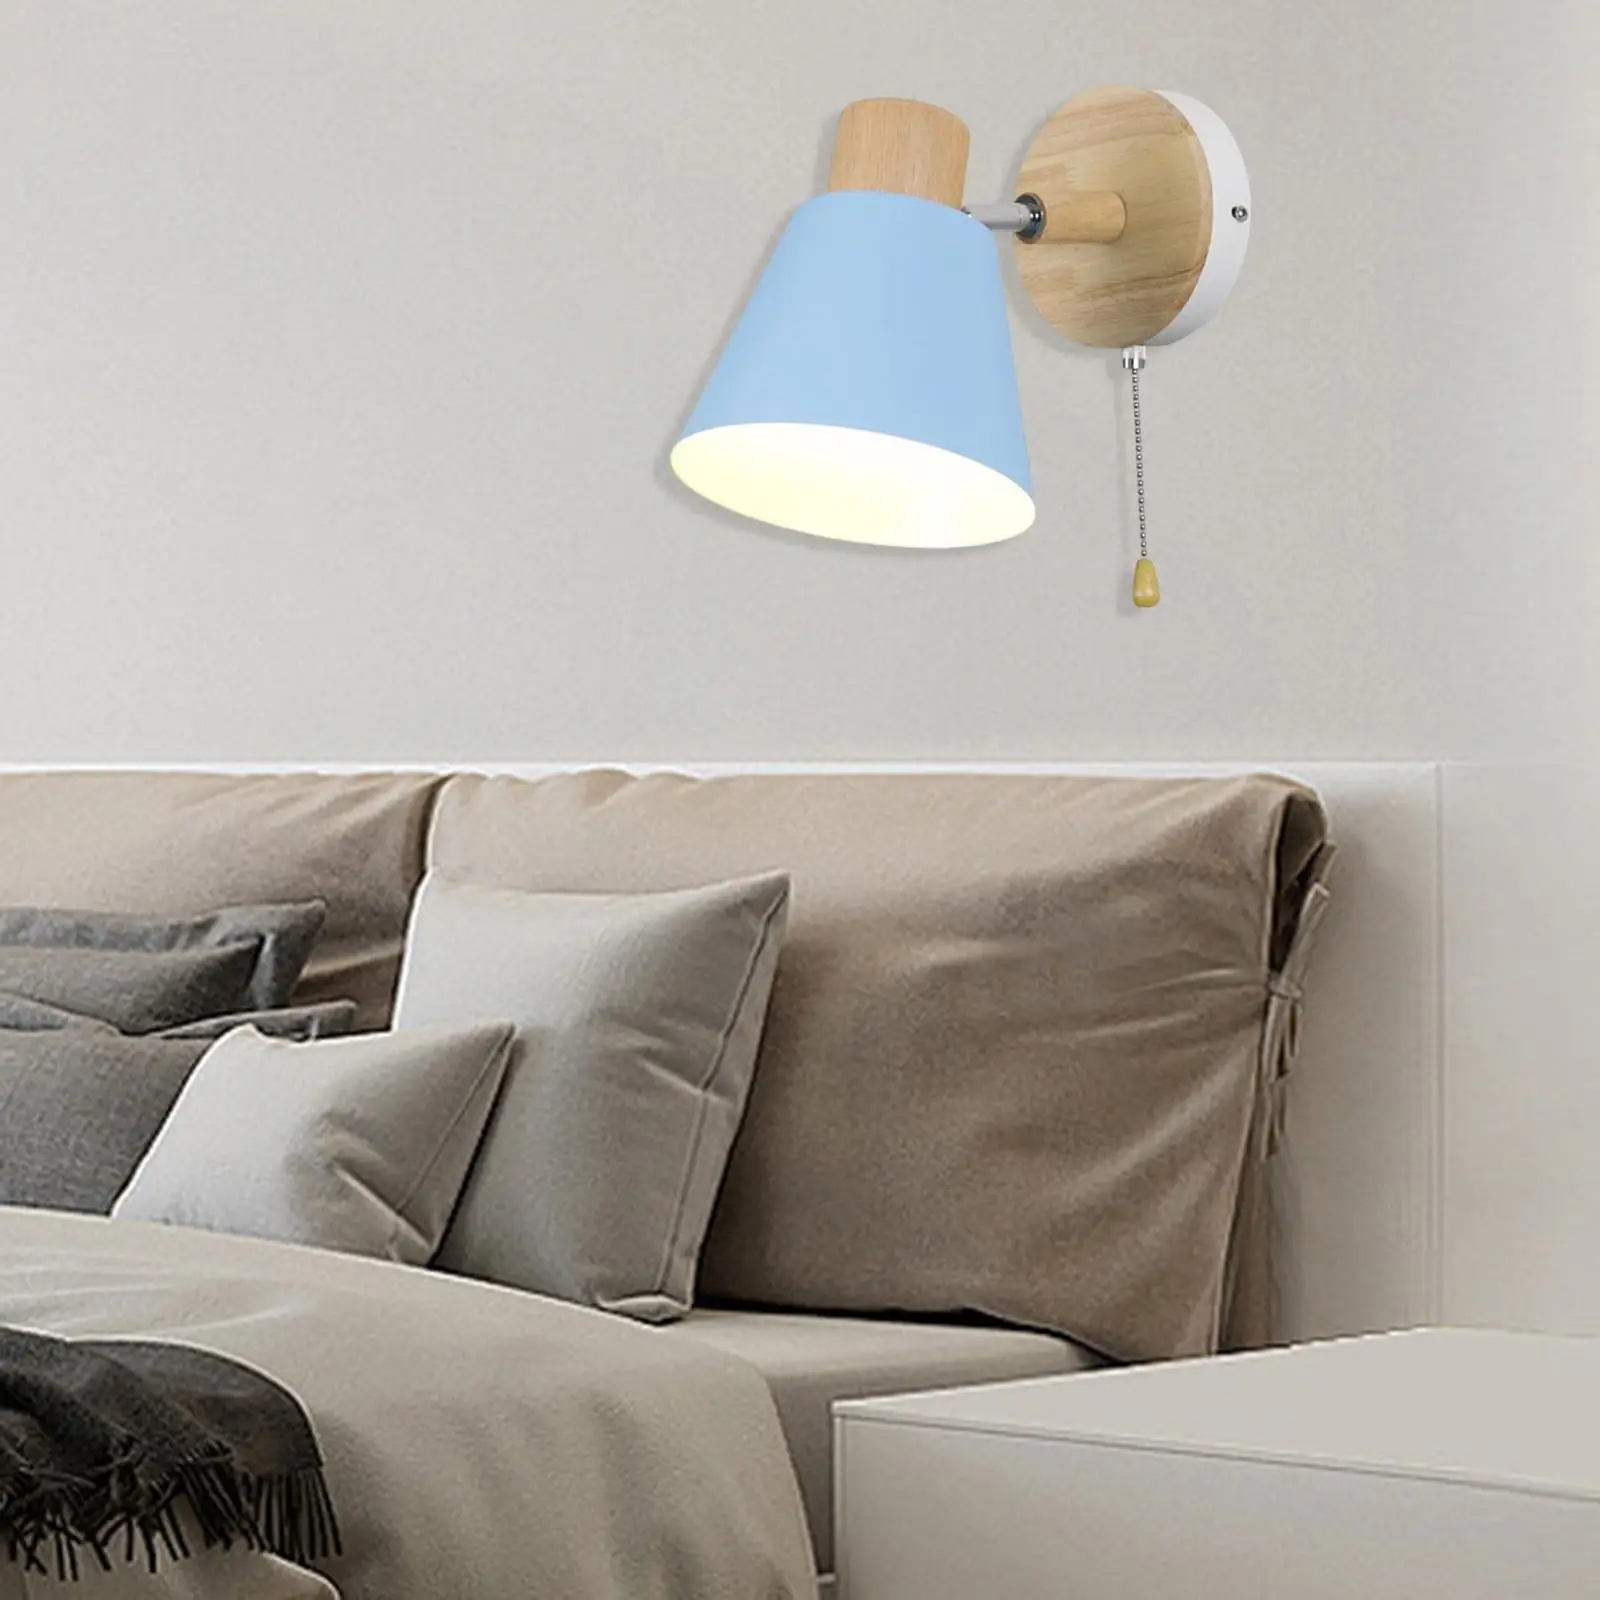 Modern Minimalist Wall Lamp Sconce Light Decorative Adjustable Lighting Fixture for Living Room Restaurant Hallway Home Decor